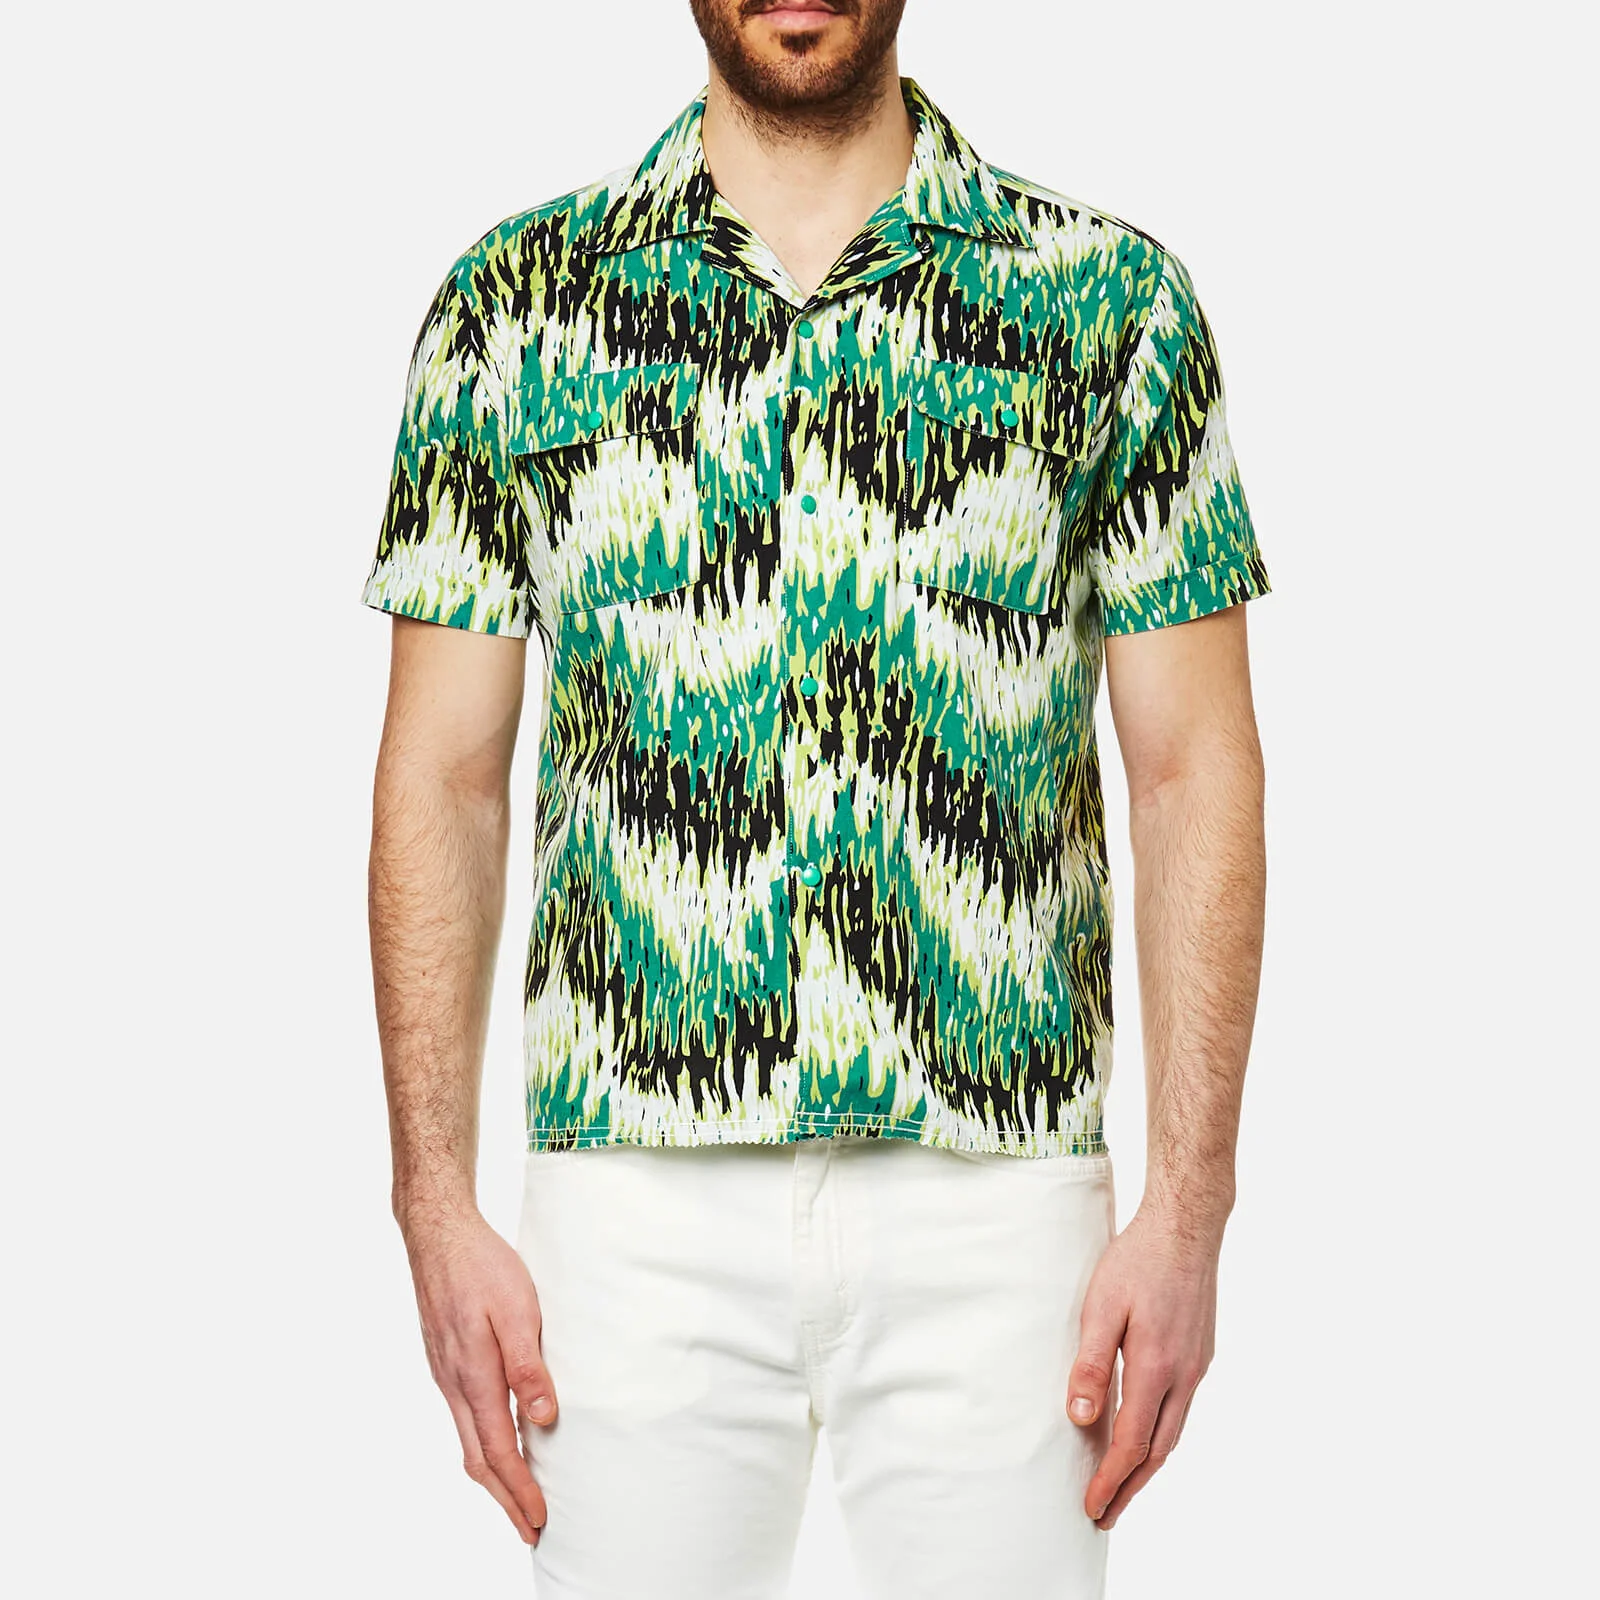 Levi's Vintage Men's Spread Collar Short Sleeve Shirt - Green Haze Multi Pattern Image 1